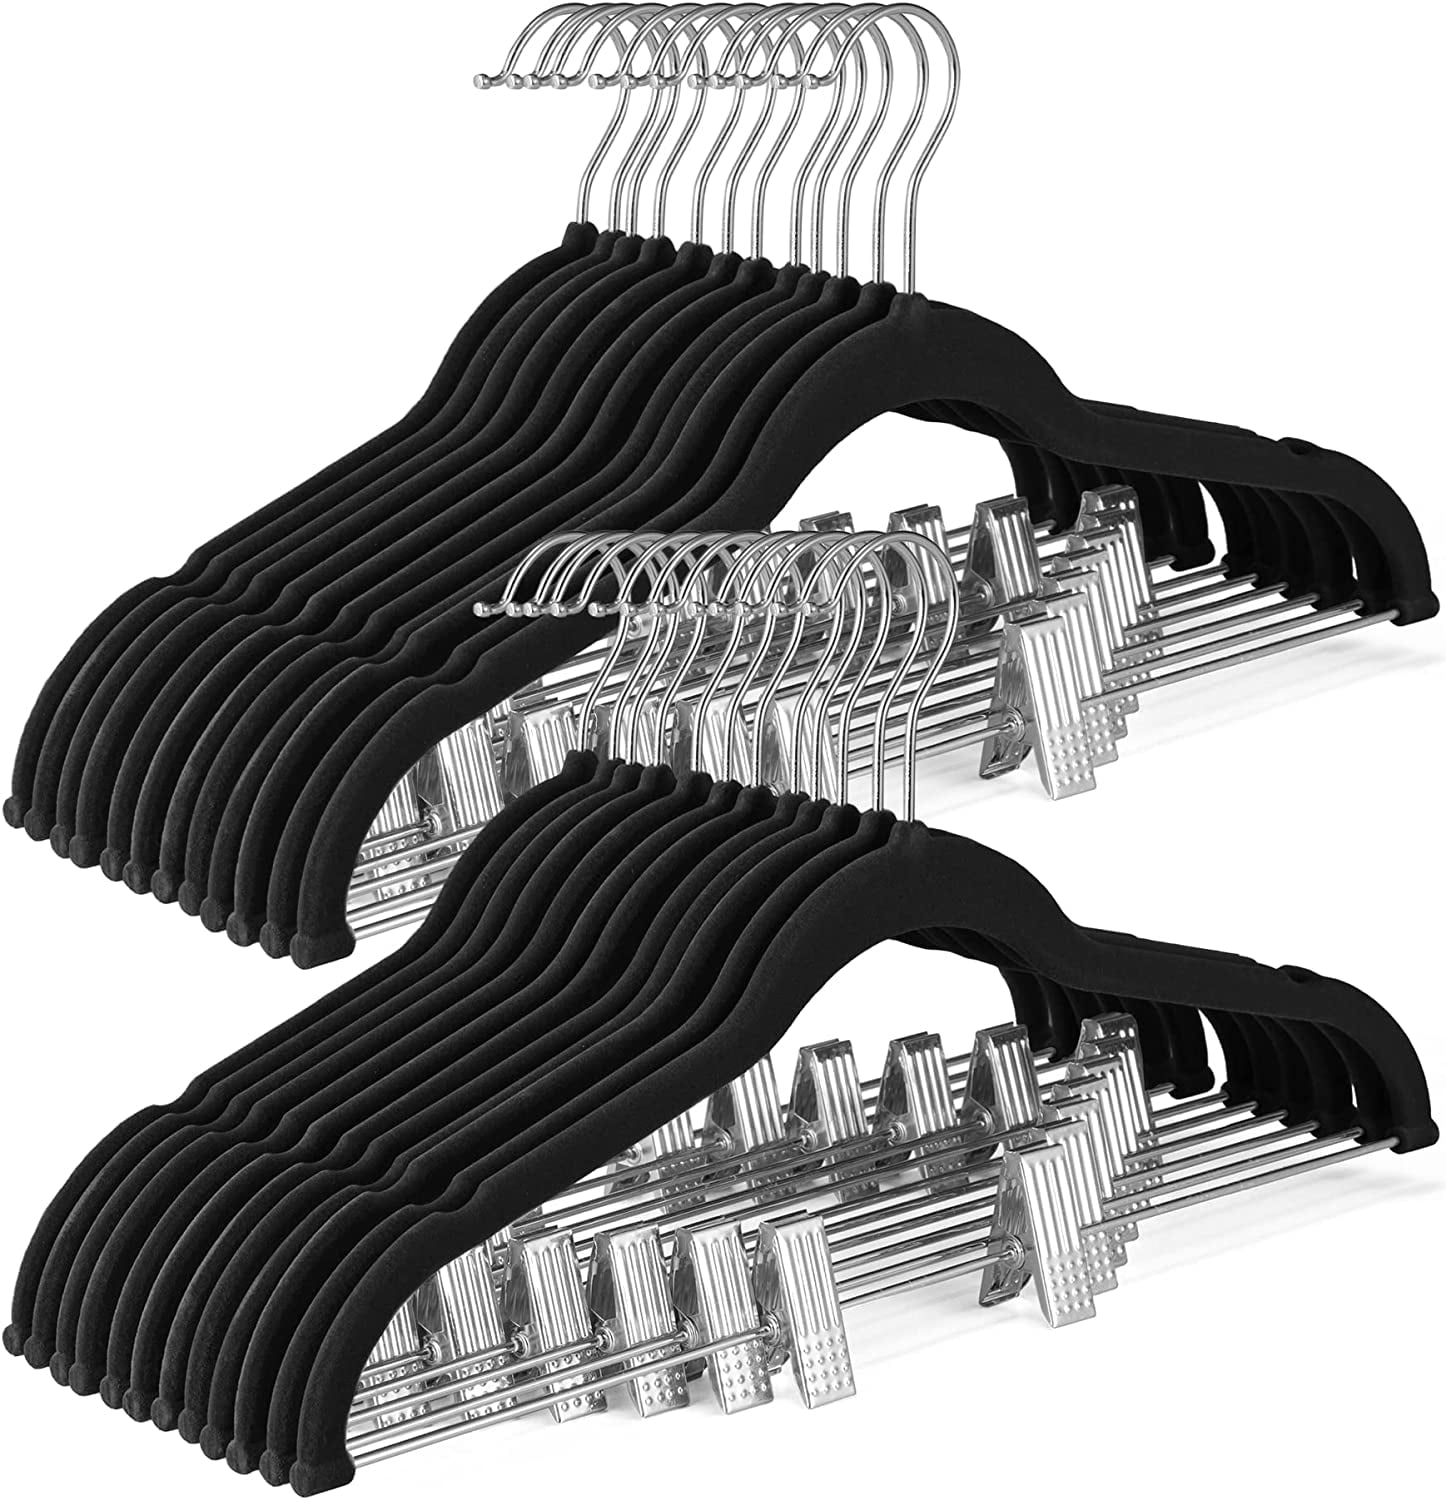 Zober Velvet Hangers 50 Pack - Heavy Duty Black Hangers for Coats, Pants &  Dress Clothes - Non Slip Clothes Hanger Set - Space Saving Felt Hangers for